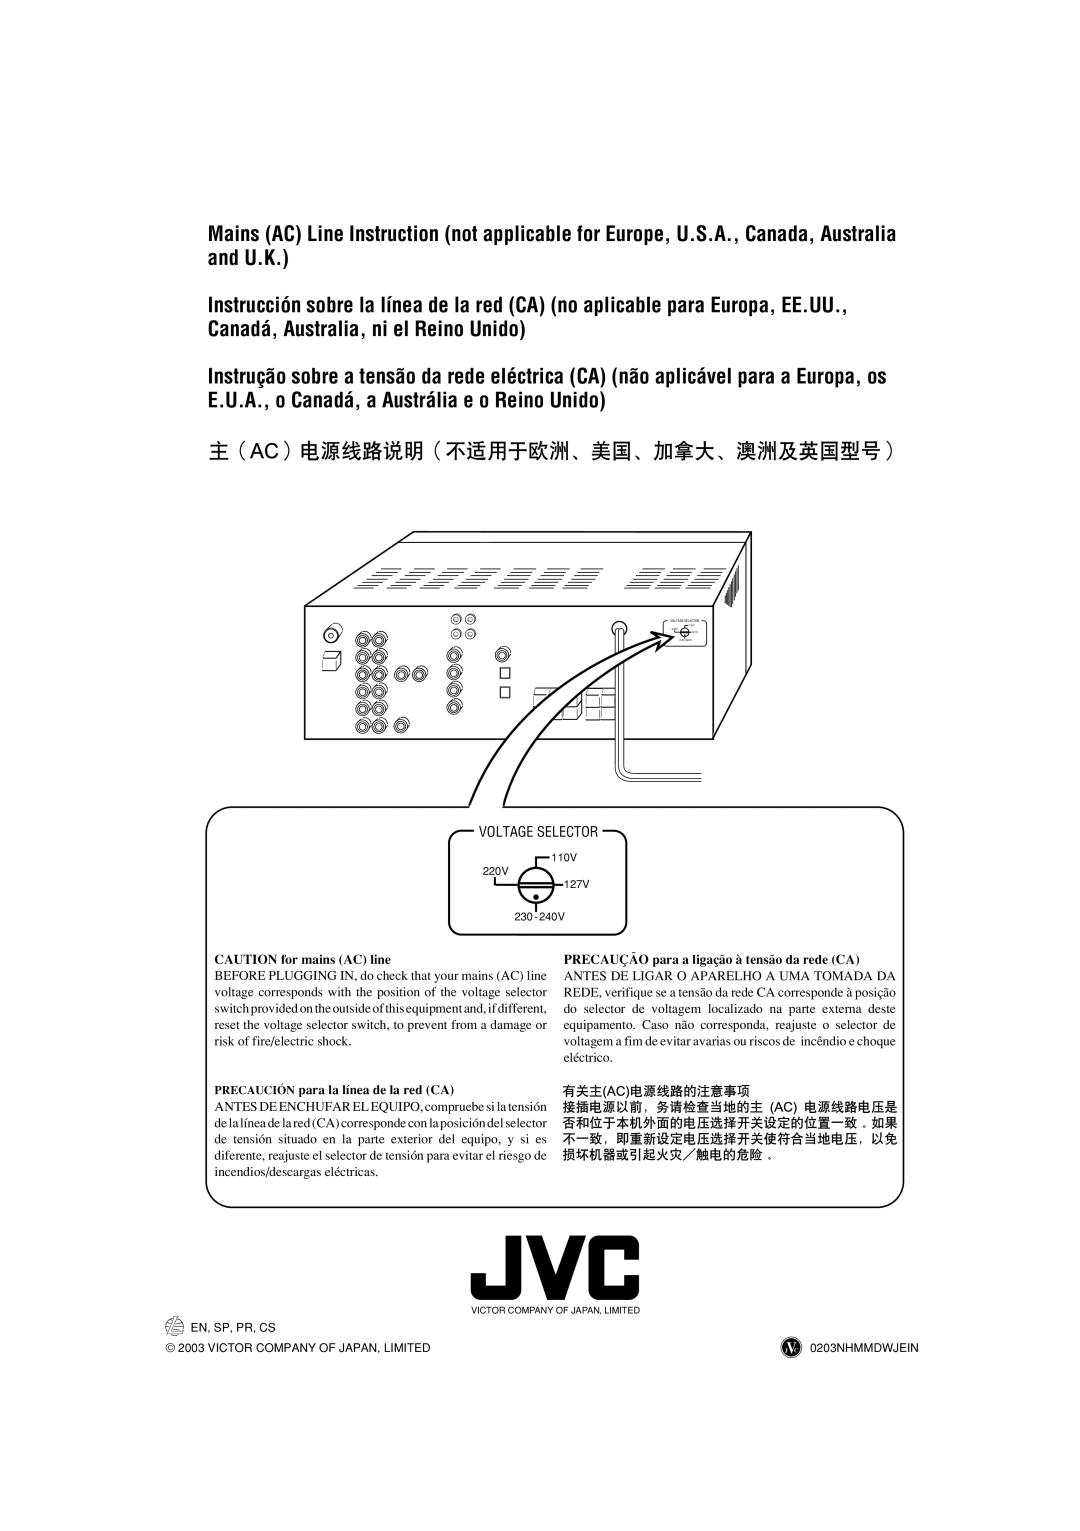 JVC RX-5032VSL manual CAUTION for mains AC line, PRECAUCIÓN para la línea de la red CA, En, Sp, Pr, Cs, 0203NHMMDWJEIN 